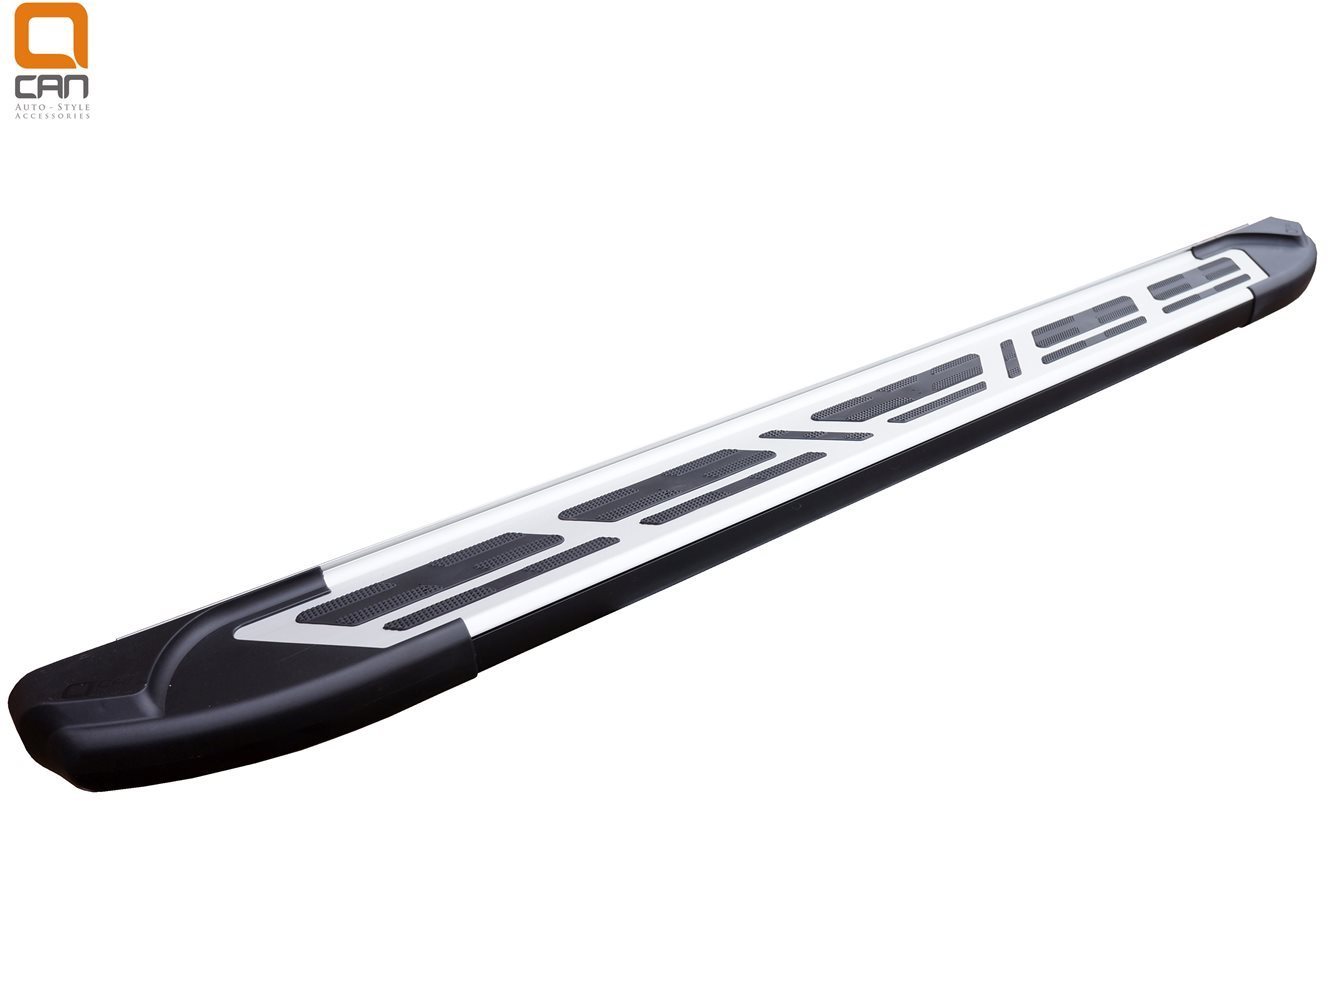 Пороги алюминиевые Nissan X-Trail с 2014 (Corund Silver)